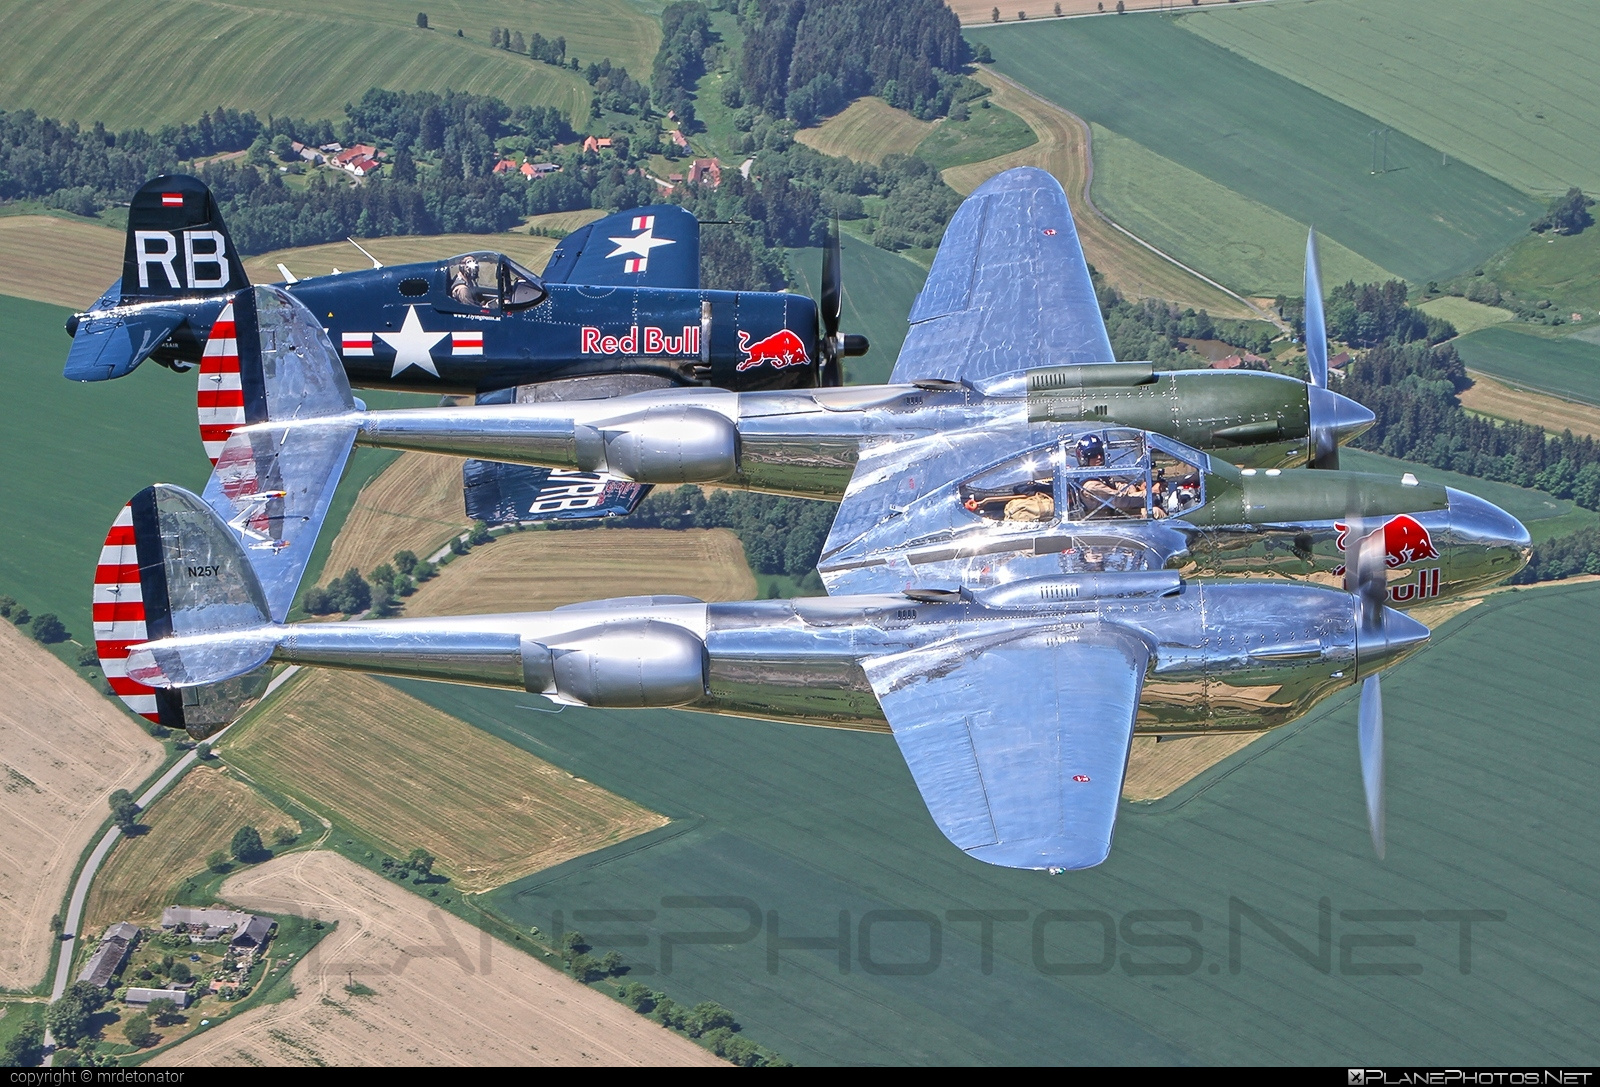 Lockheed P-38L Lightning - N25Y operated by The Flying Bulls #lockheed #theflyingbulls